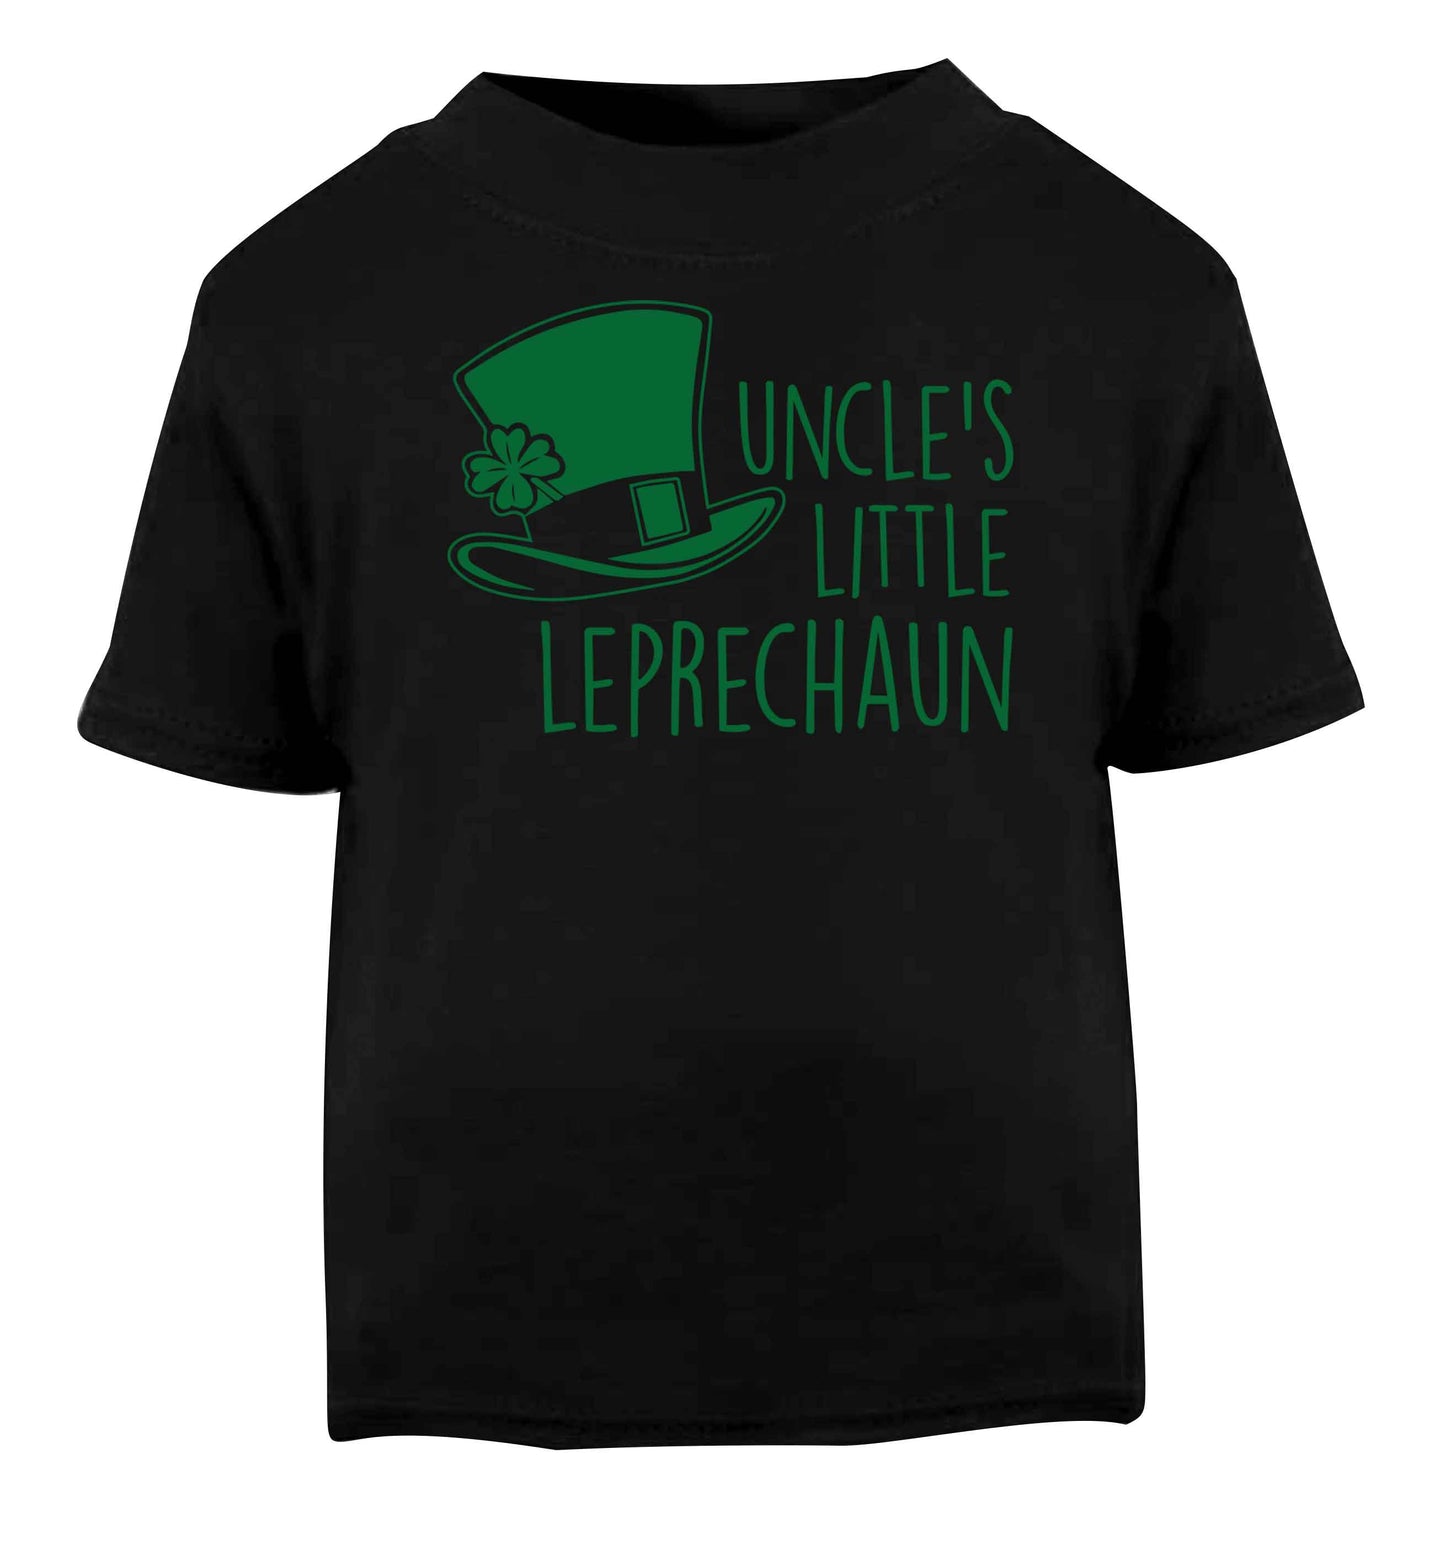 Uncles little leprechaun Black baby toddler Tshirt 2 years